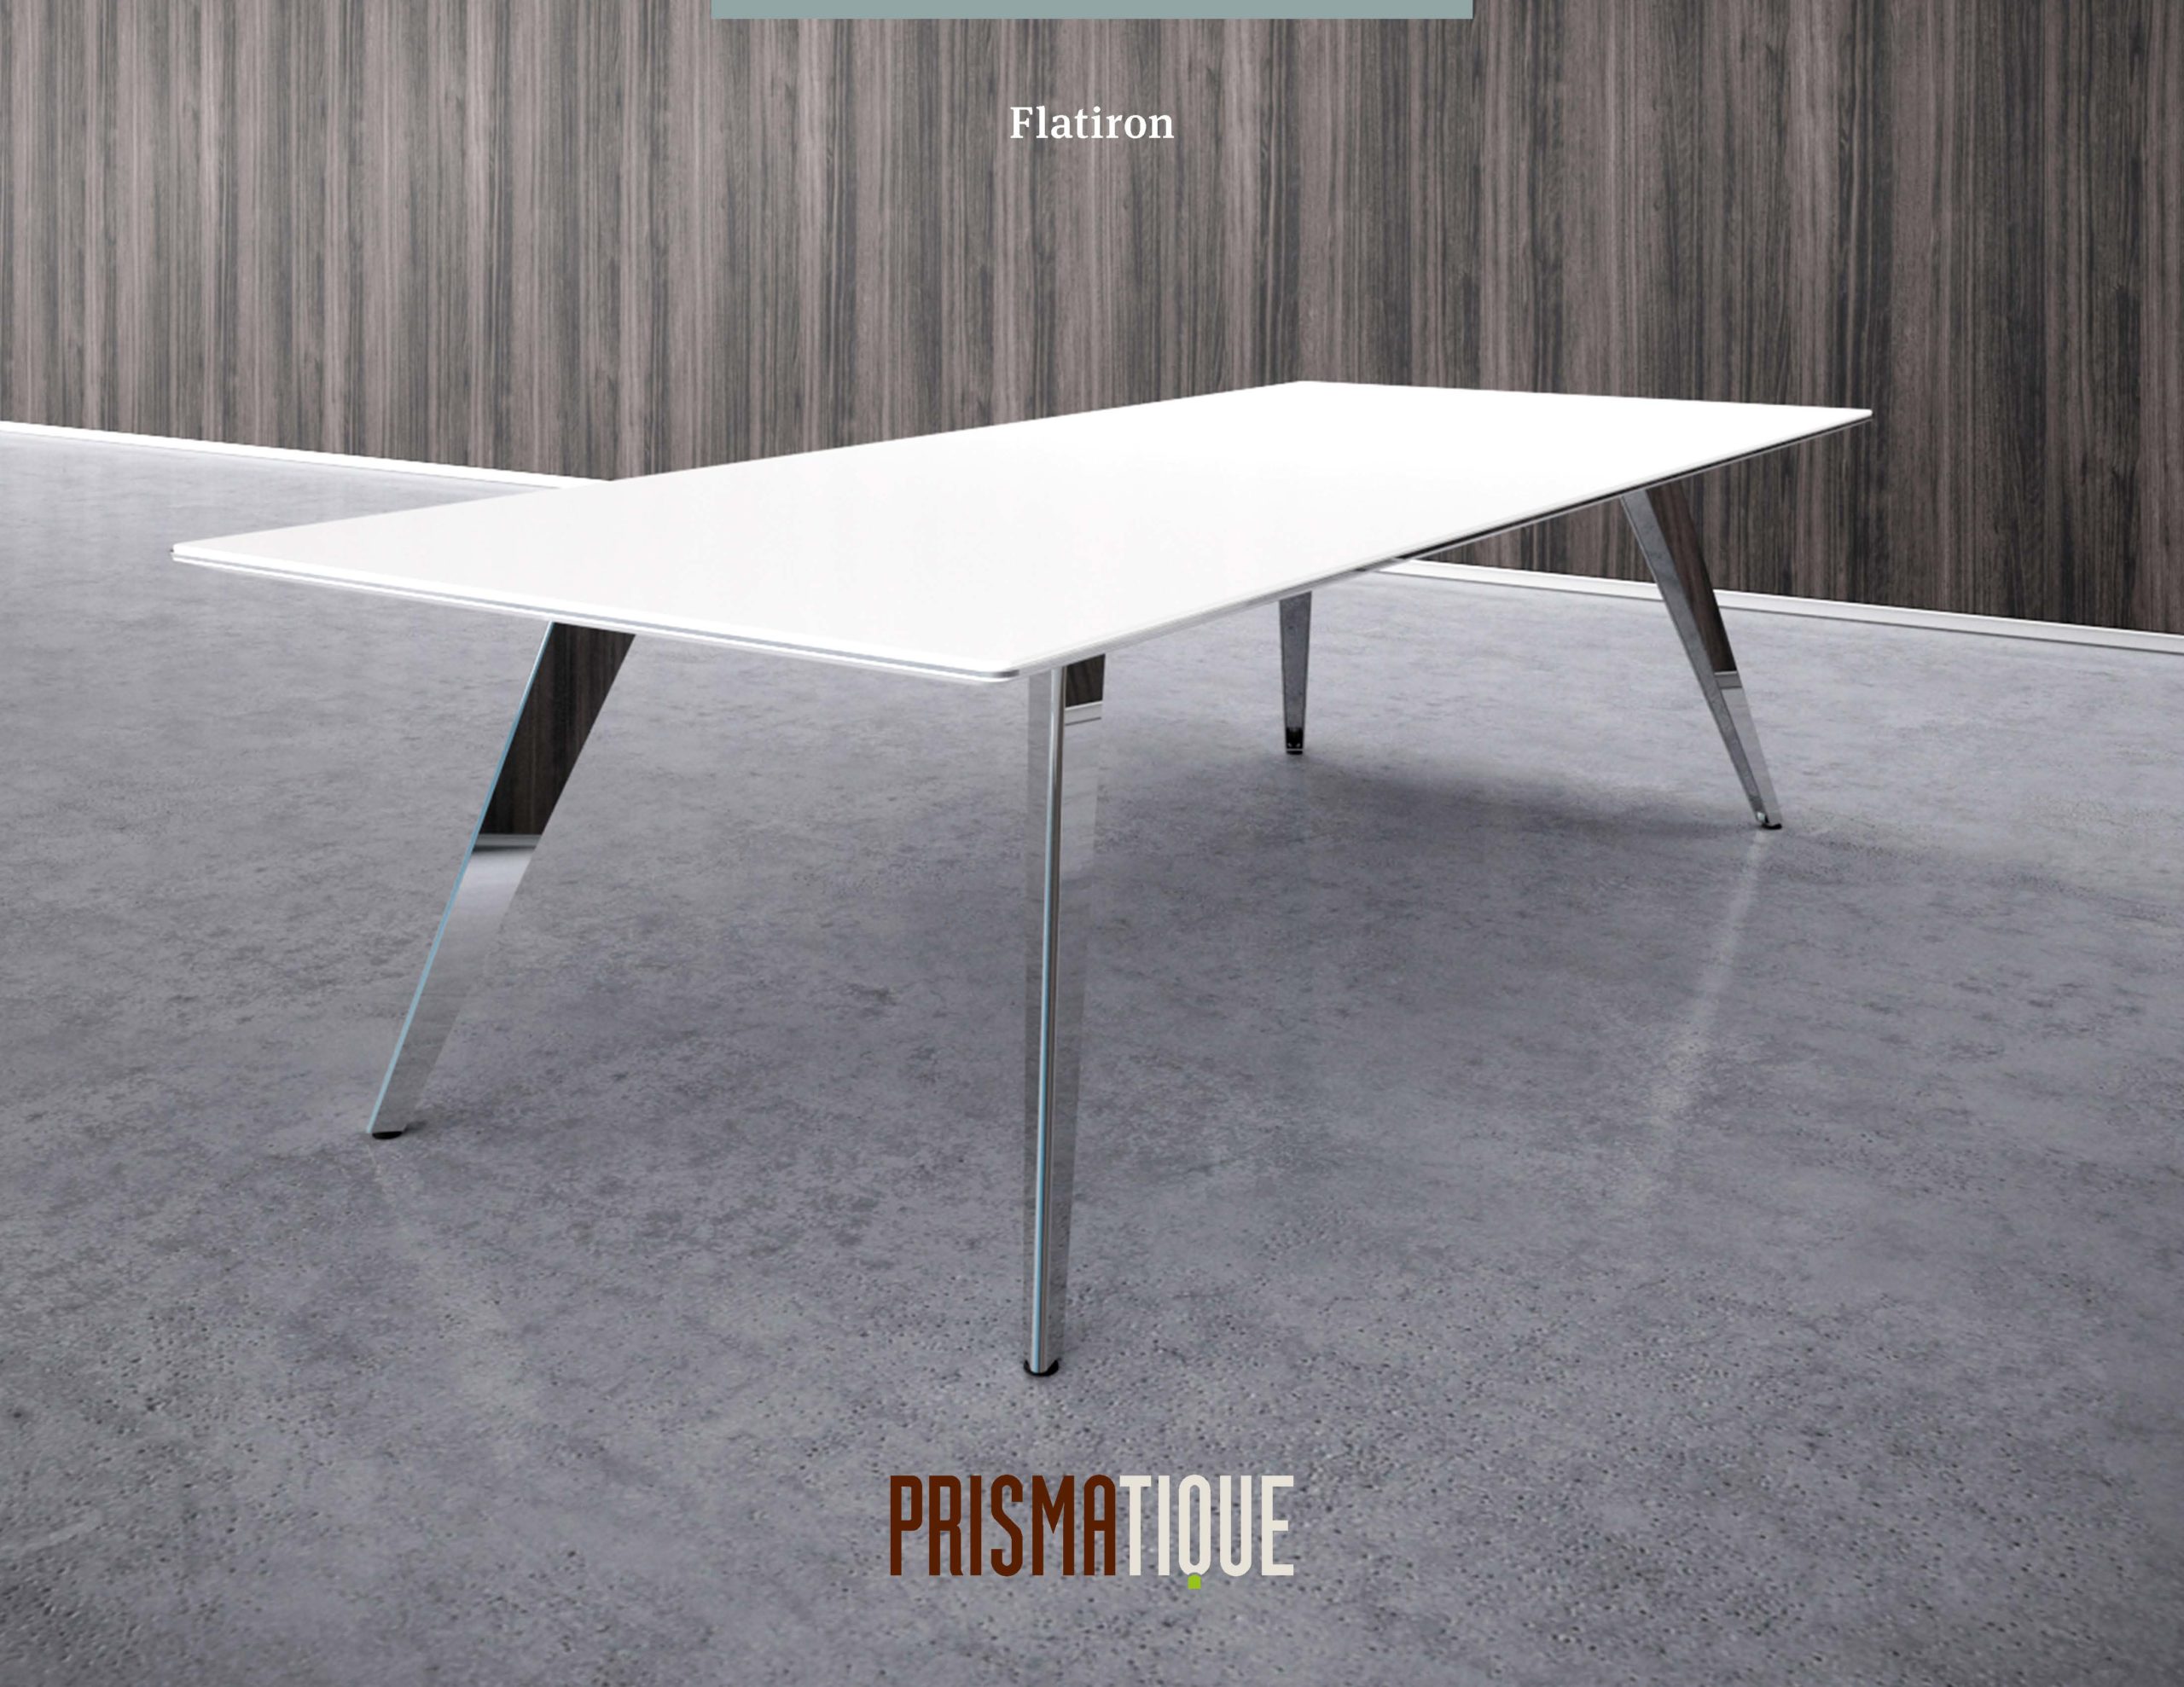 Prismatique Catalog_Flatiron Brochure Cover